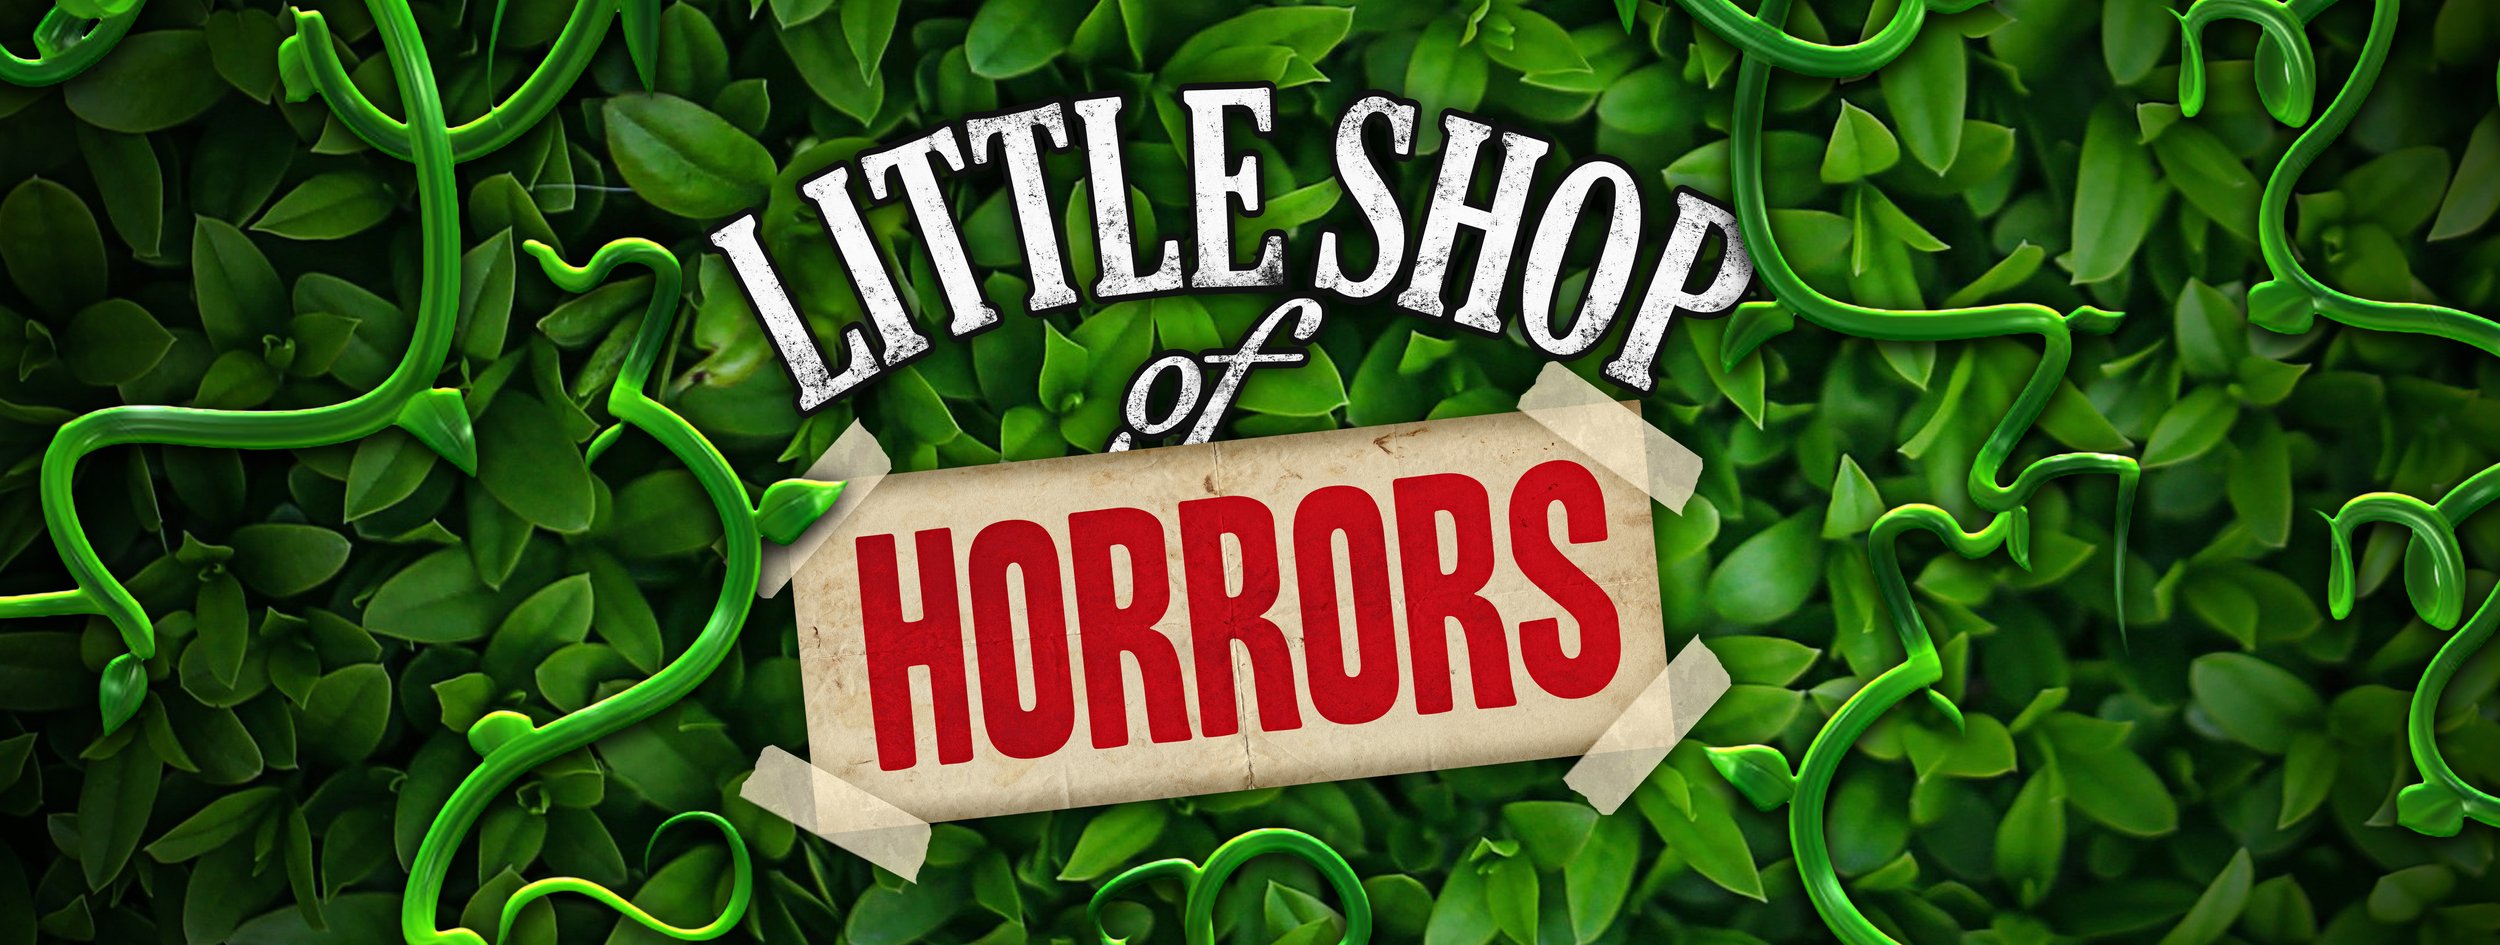 Imagine That Performing Arts - Little Shop of Horrors (2022) FB Banner JPEG.jpg